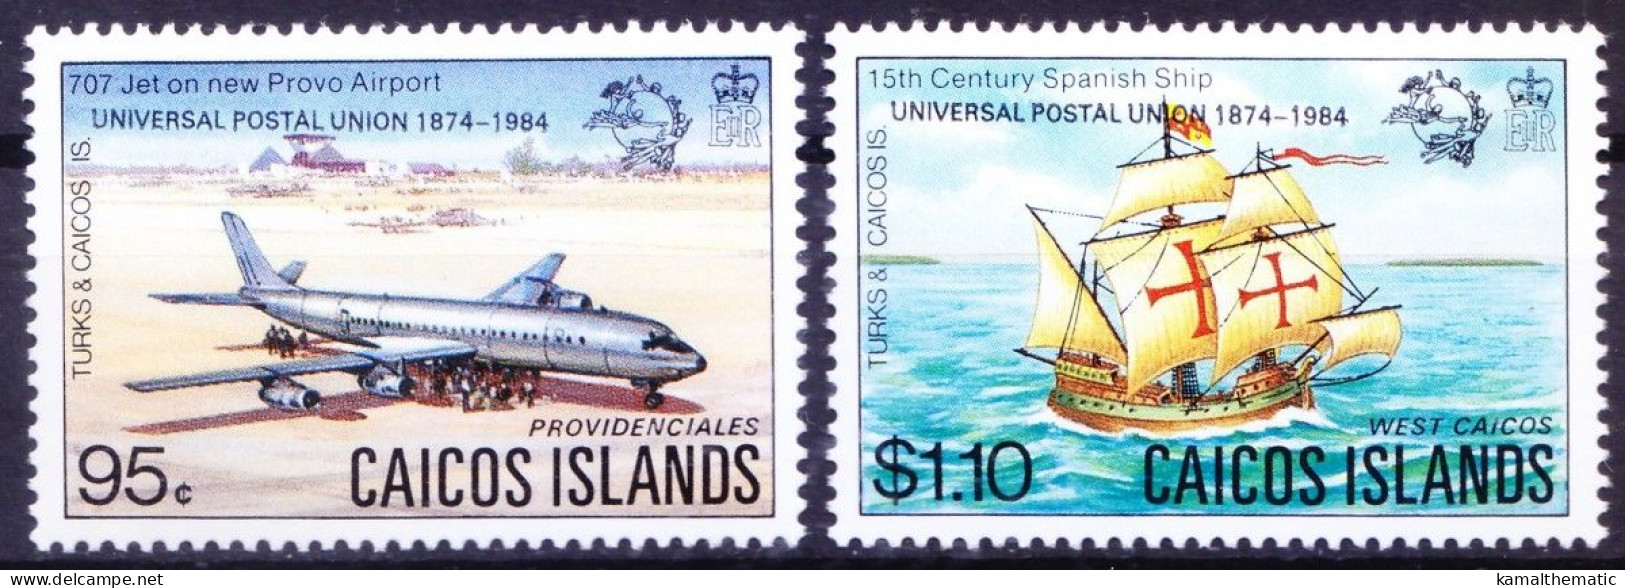 Caicos Islands 1984 MNH 2v, U.P.U. Hamburg, Overprint - UPU (Union Postale Universelle)